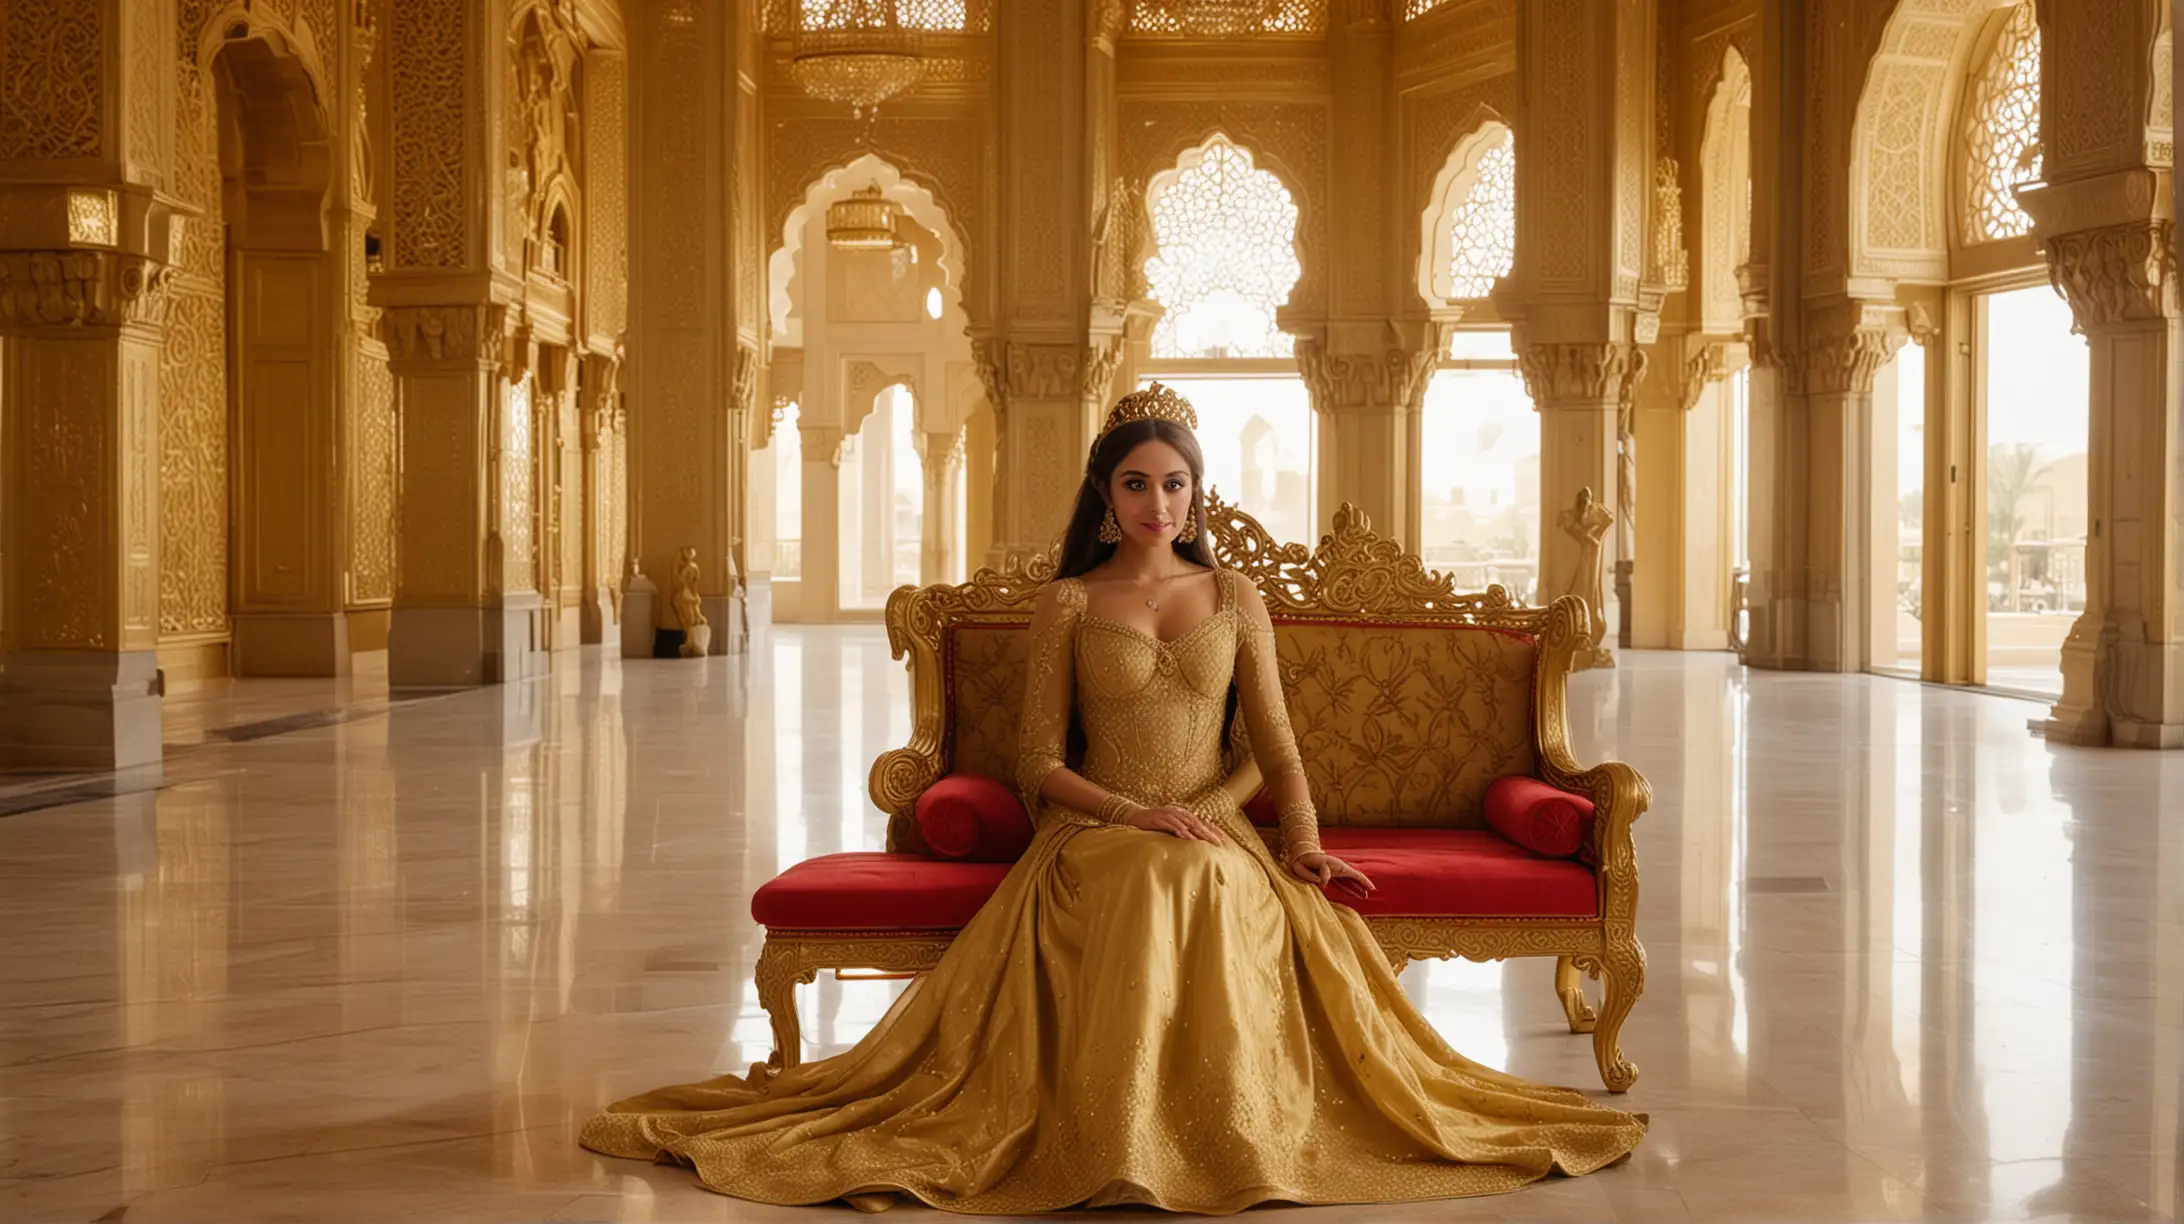 Luxurious Dubai Princess Relaxing in Opulent Golden Palace